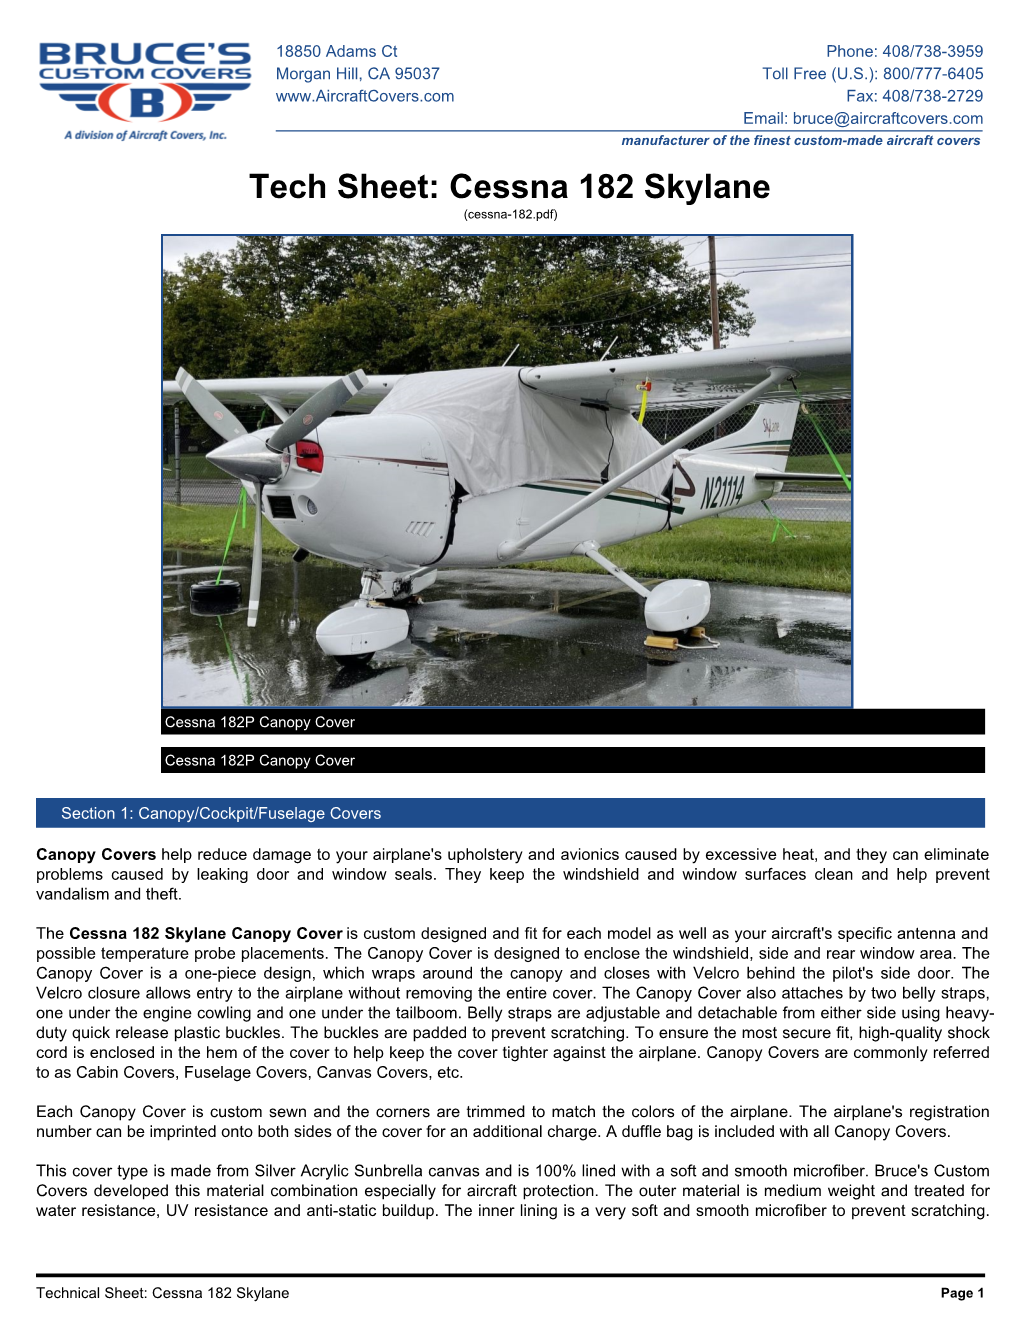 Cessna 182 Skylane (Cessna-182.Pdf)